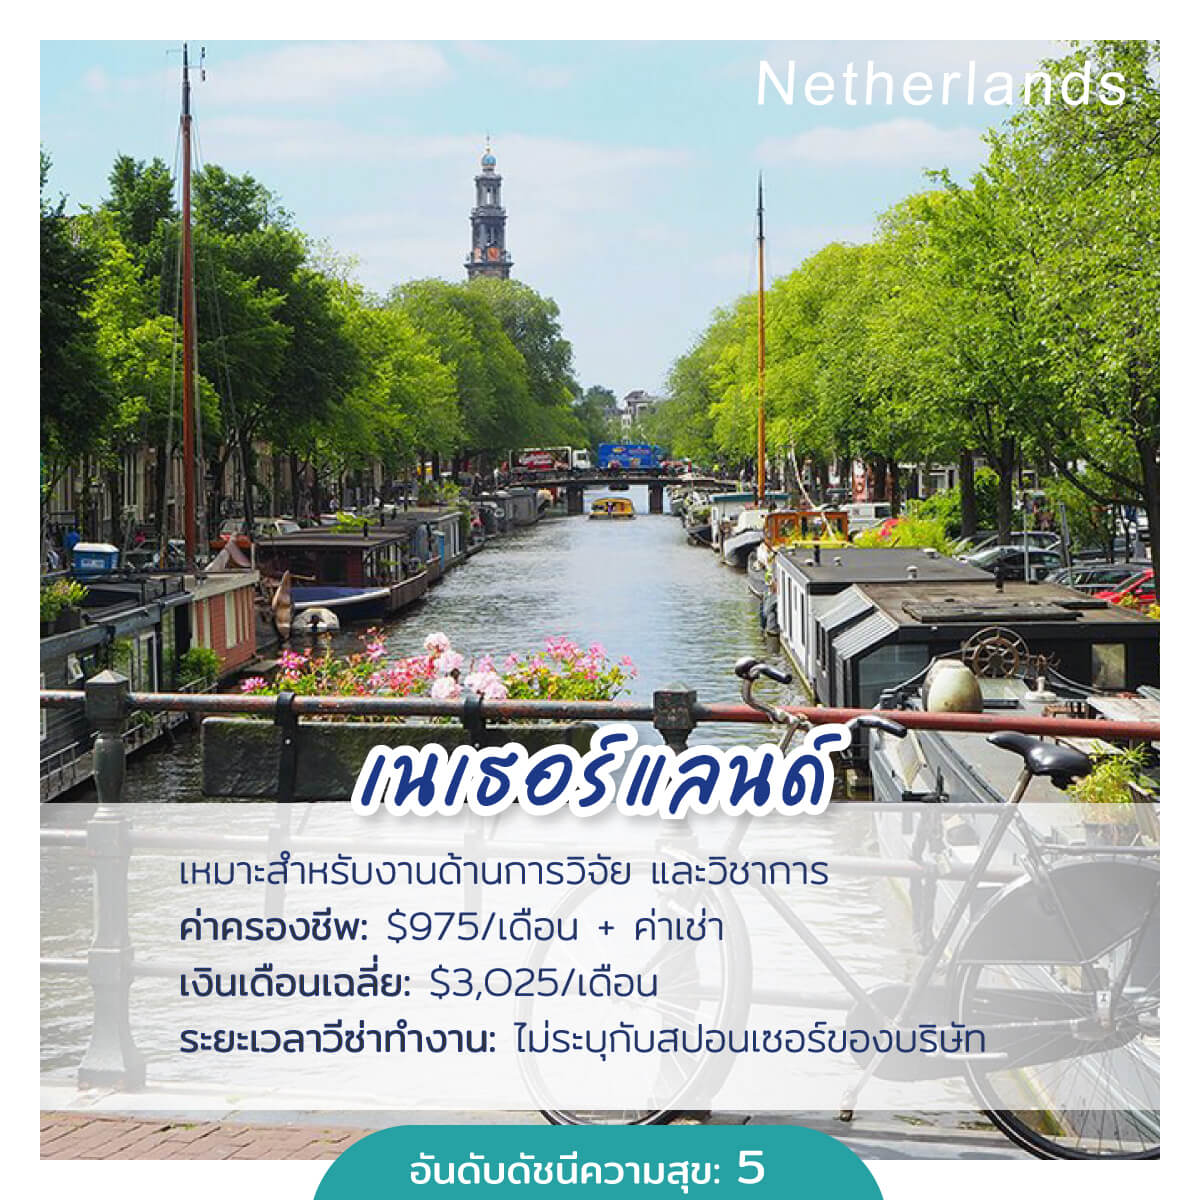 Work abroad Netherlands ทํา งาน เนเธอร์แลนด์ ราย ได้ เฉลี่ย  $3,025 / เดือน